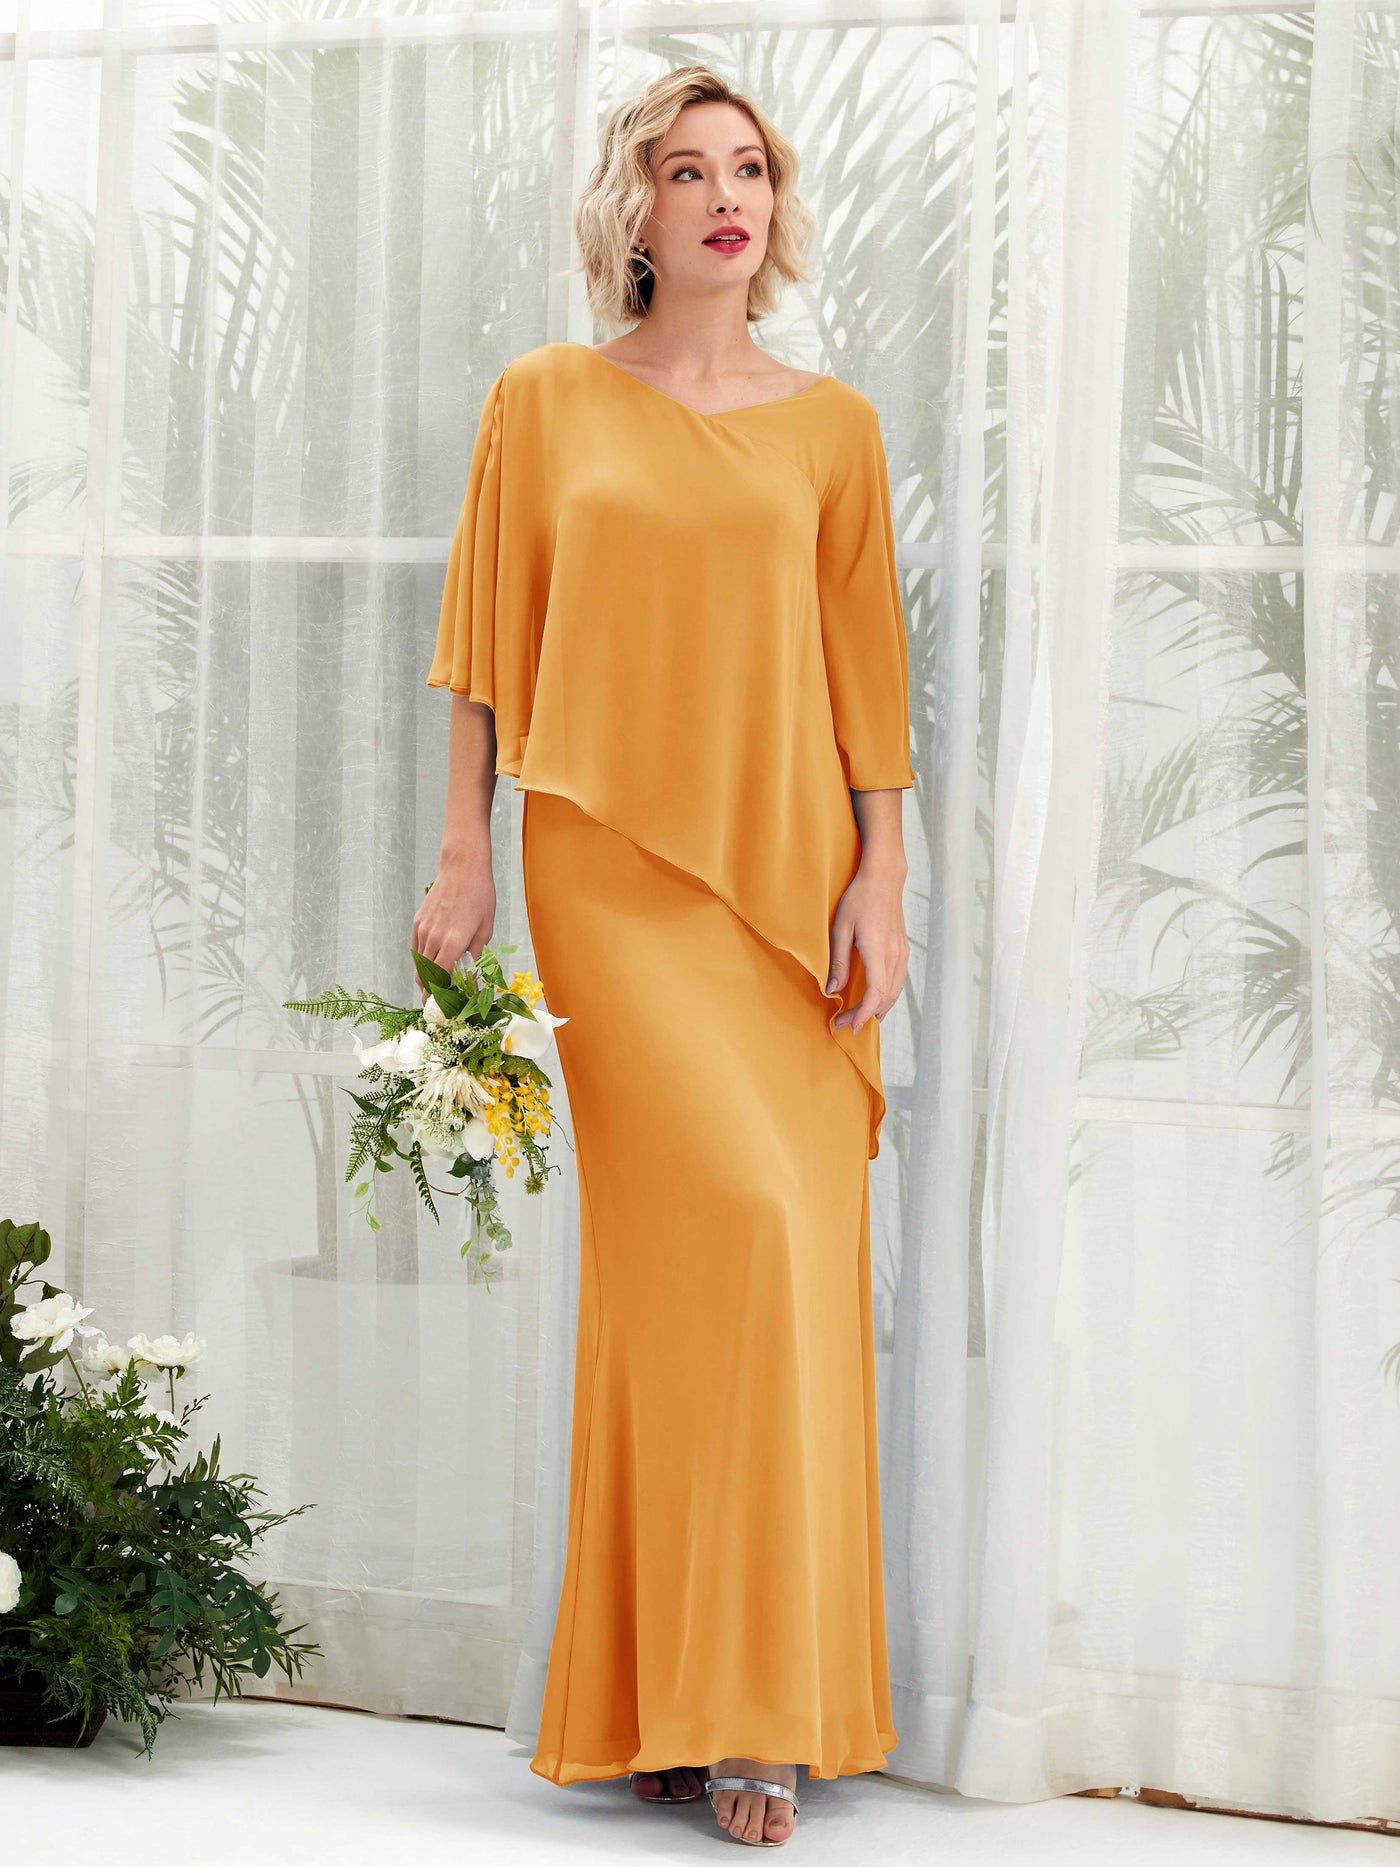 Mango Bridesmaid Dresses Bridesmaid Dress Bohemian Chiffon V-neck Full Length 3/4 Sleeves Wedding Party Dress (81222502)#color_mango